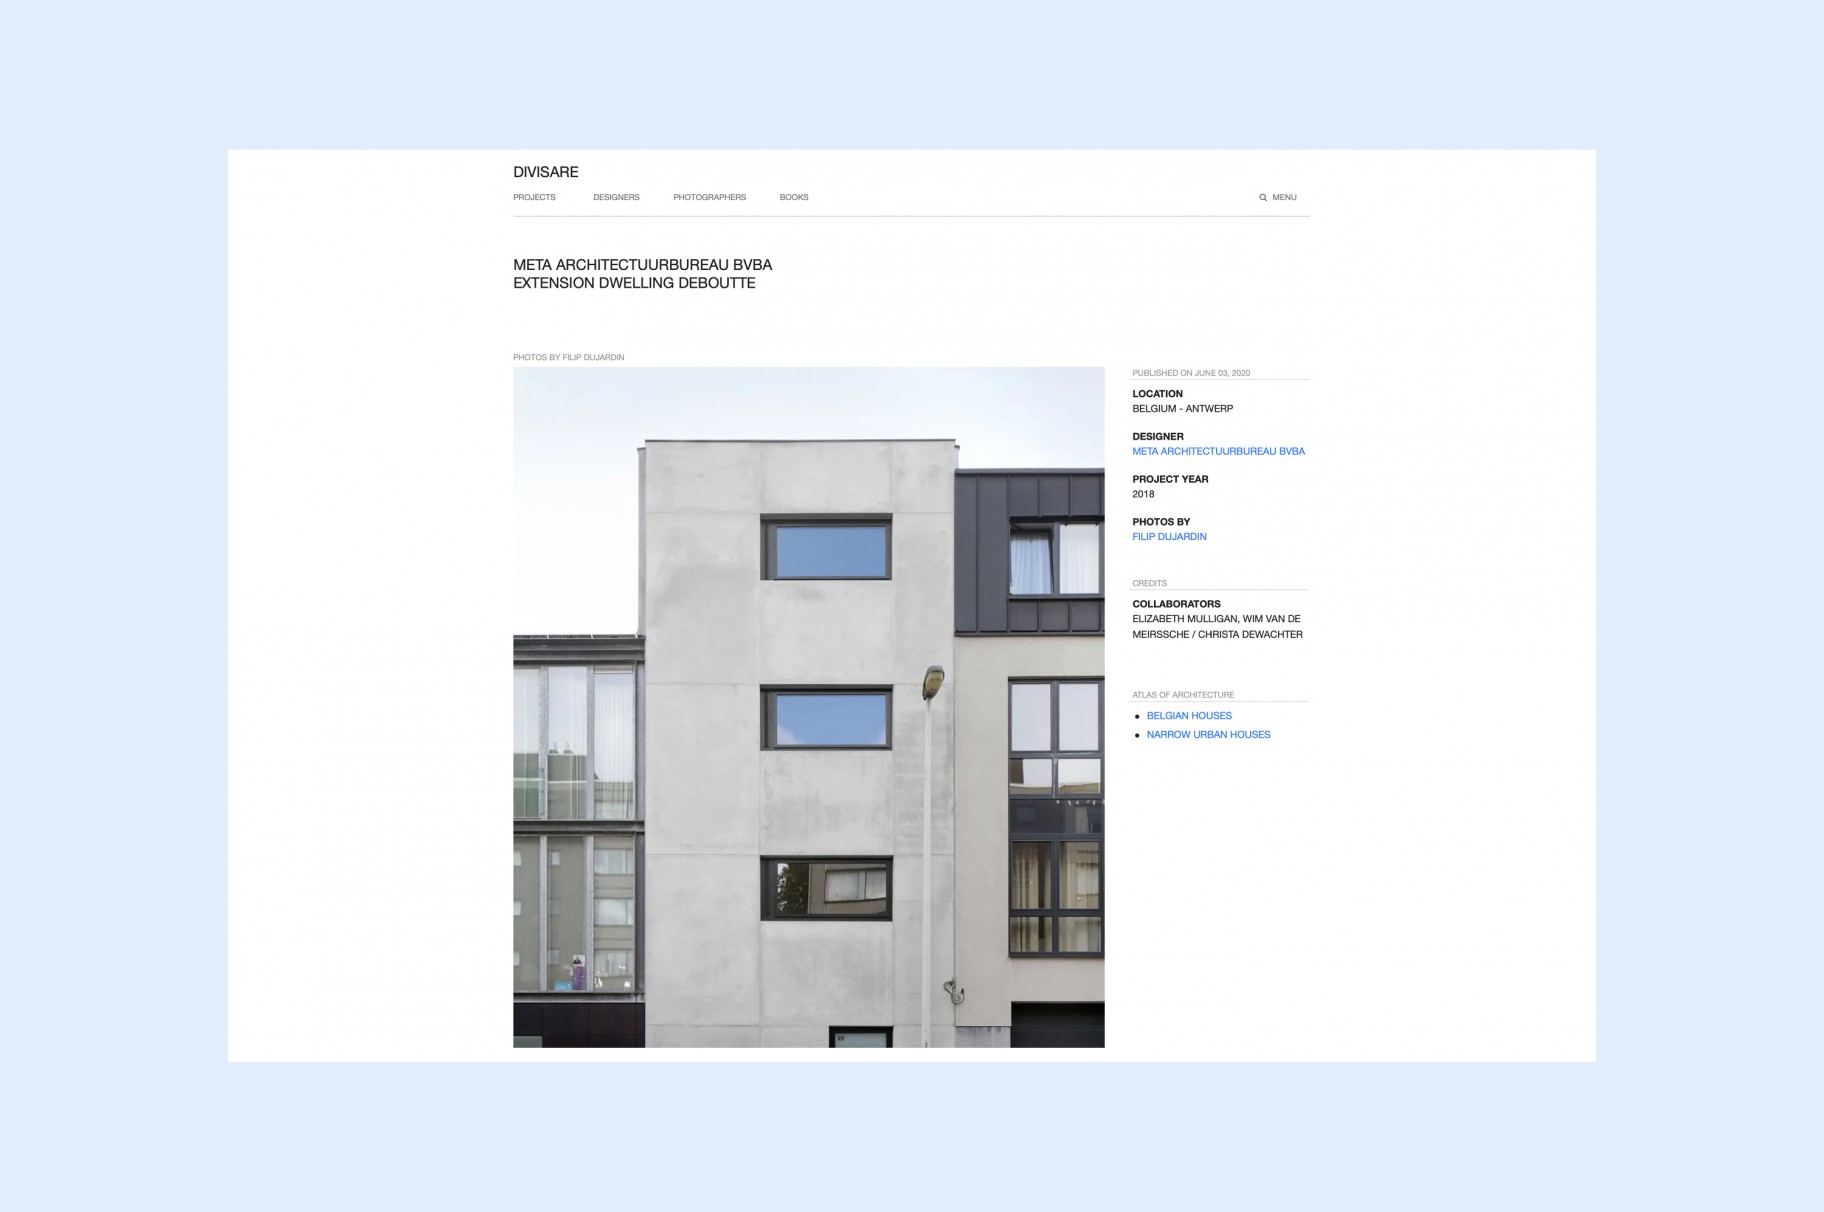 Deboutte house Antwerp published online